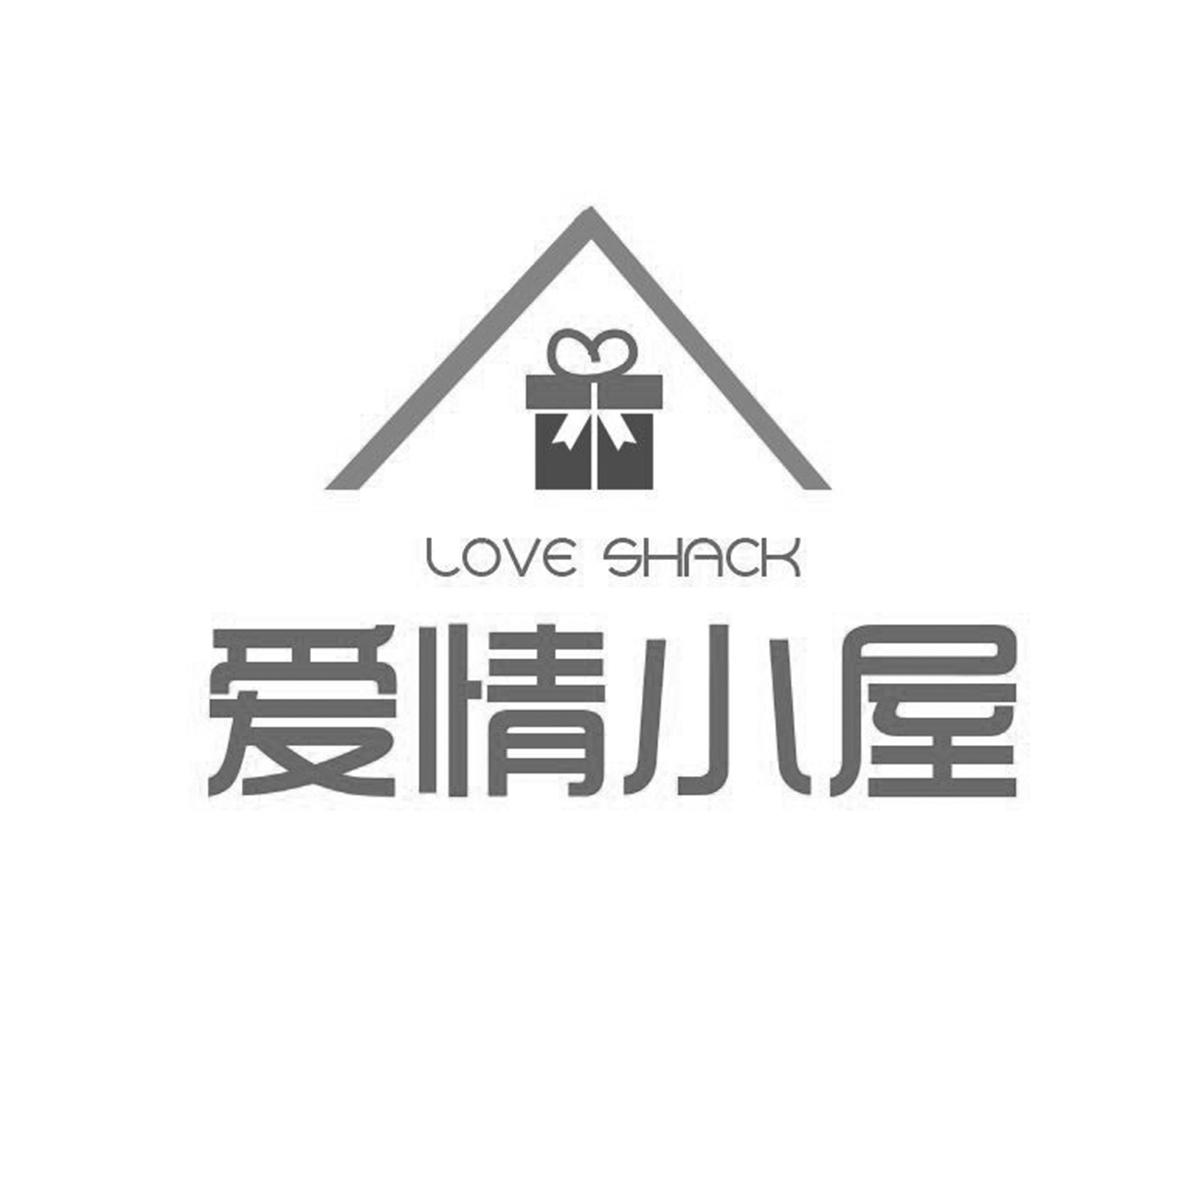 爱情小屋 love shack 商标公告